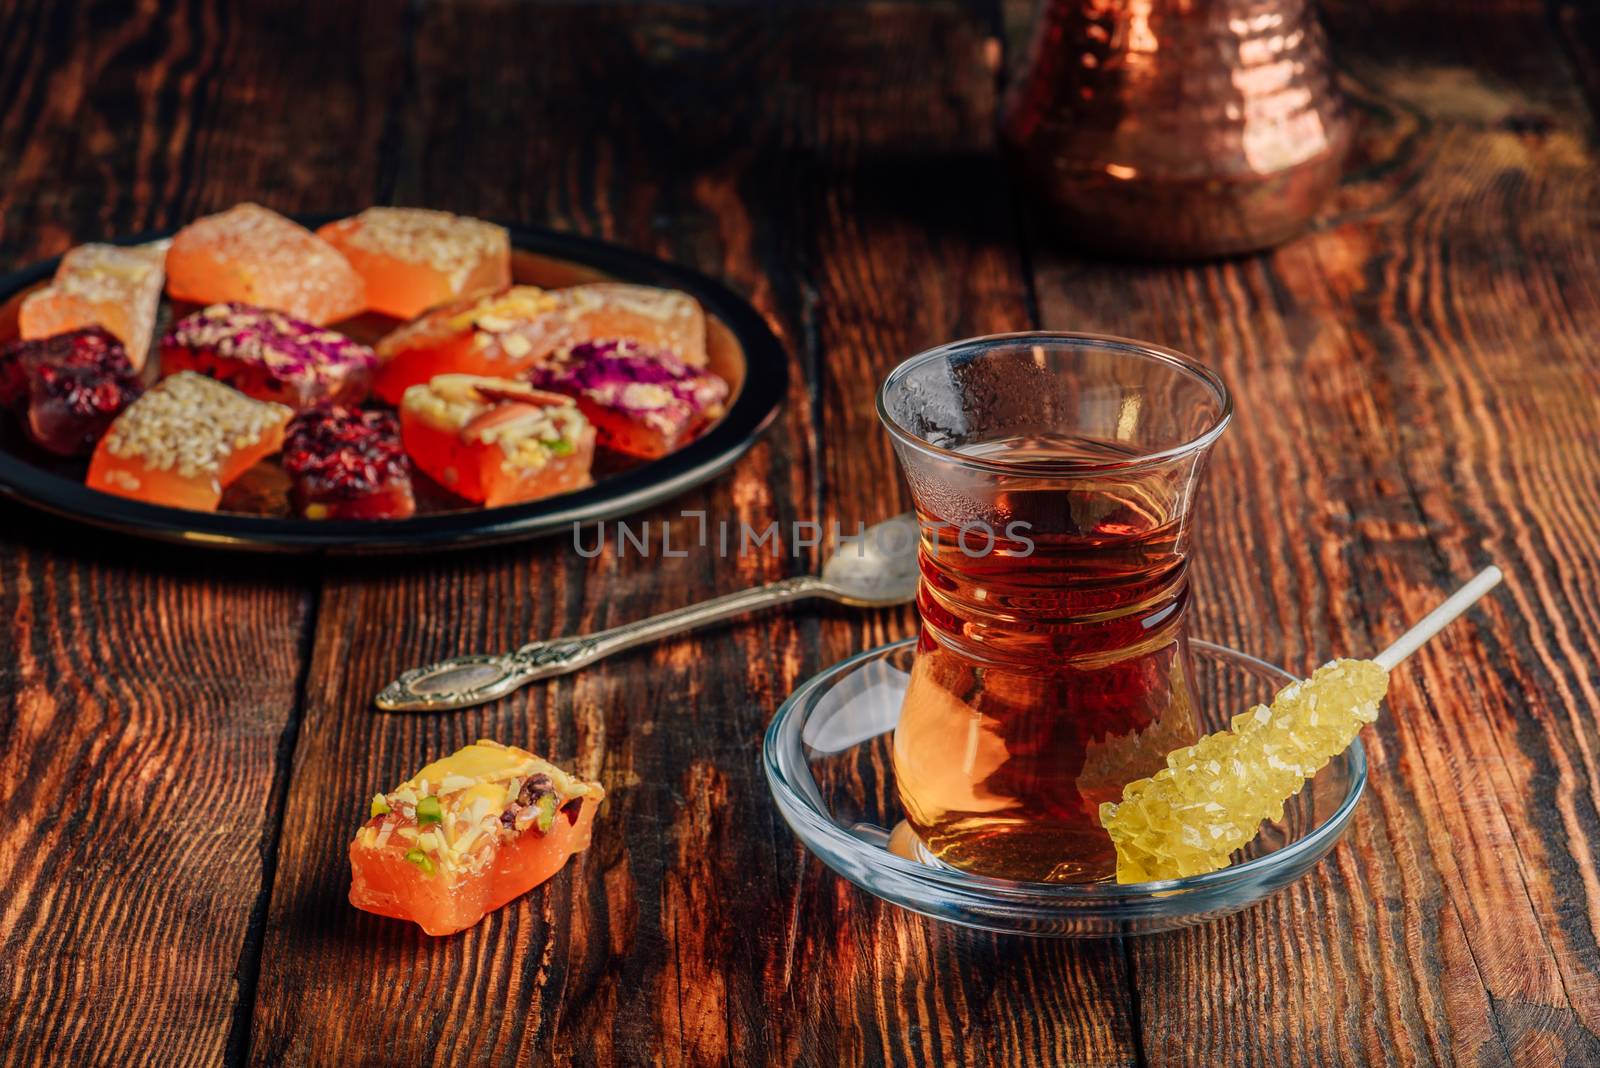 Tea in armudu glass with rahat lokum by Seva_blsv